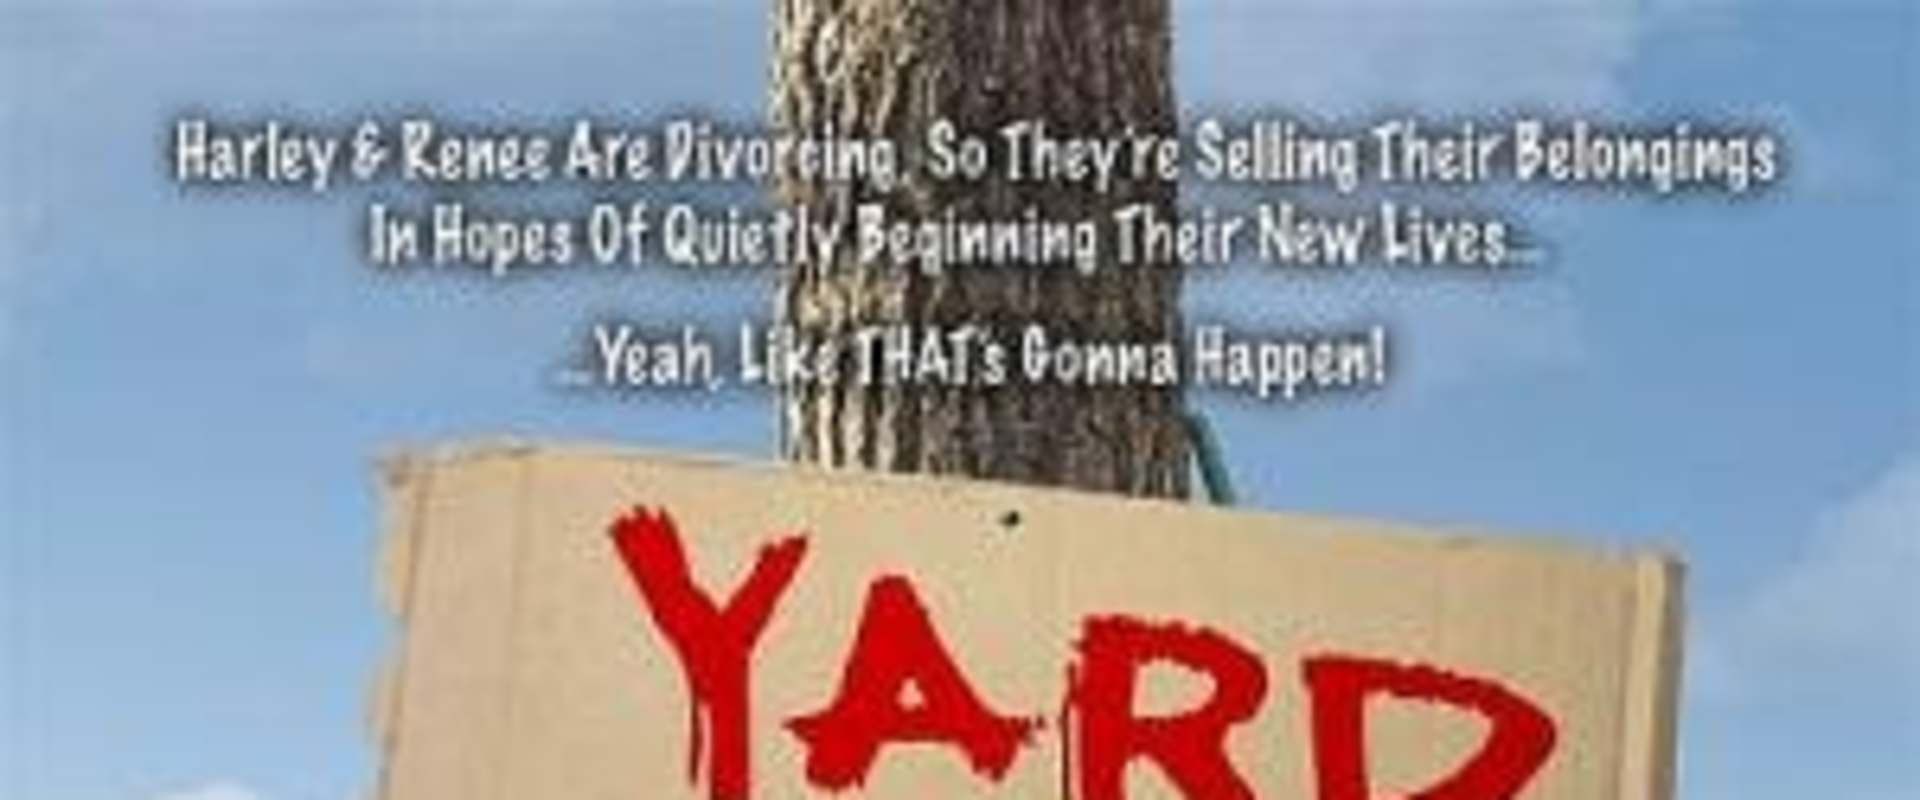 Yard Sale background 1